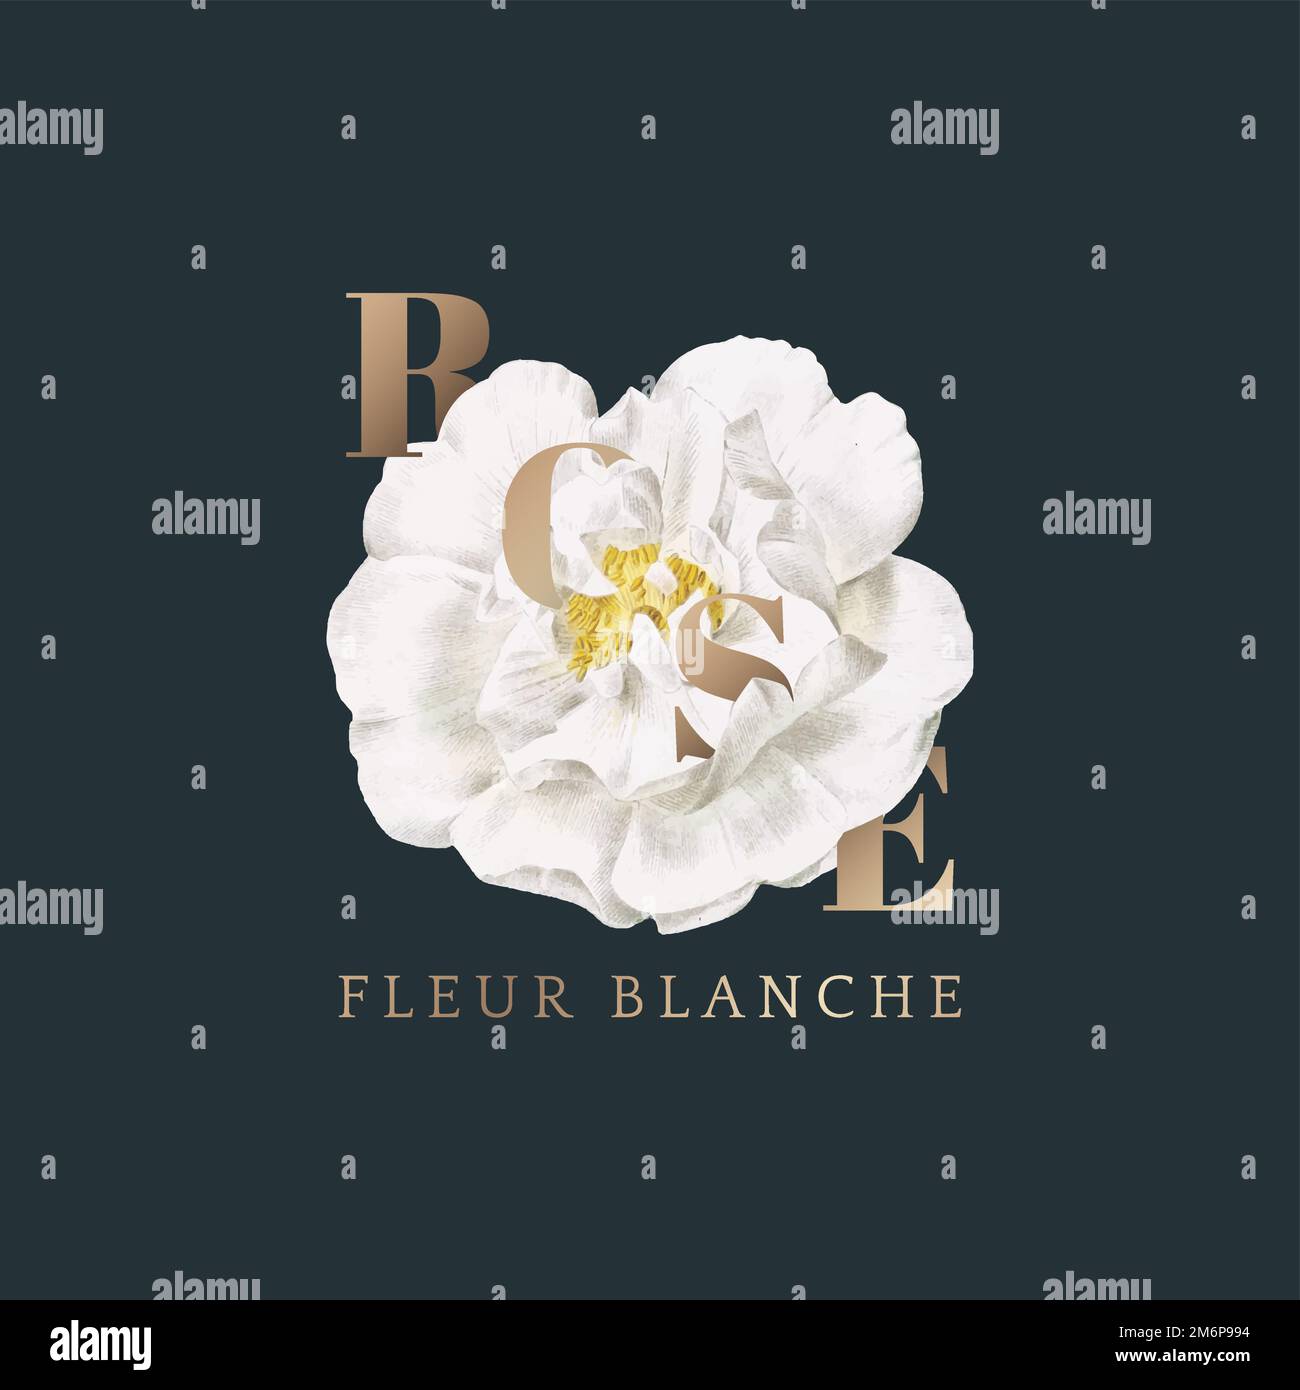 Blooming rose fleur blance vector Stock Vector